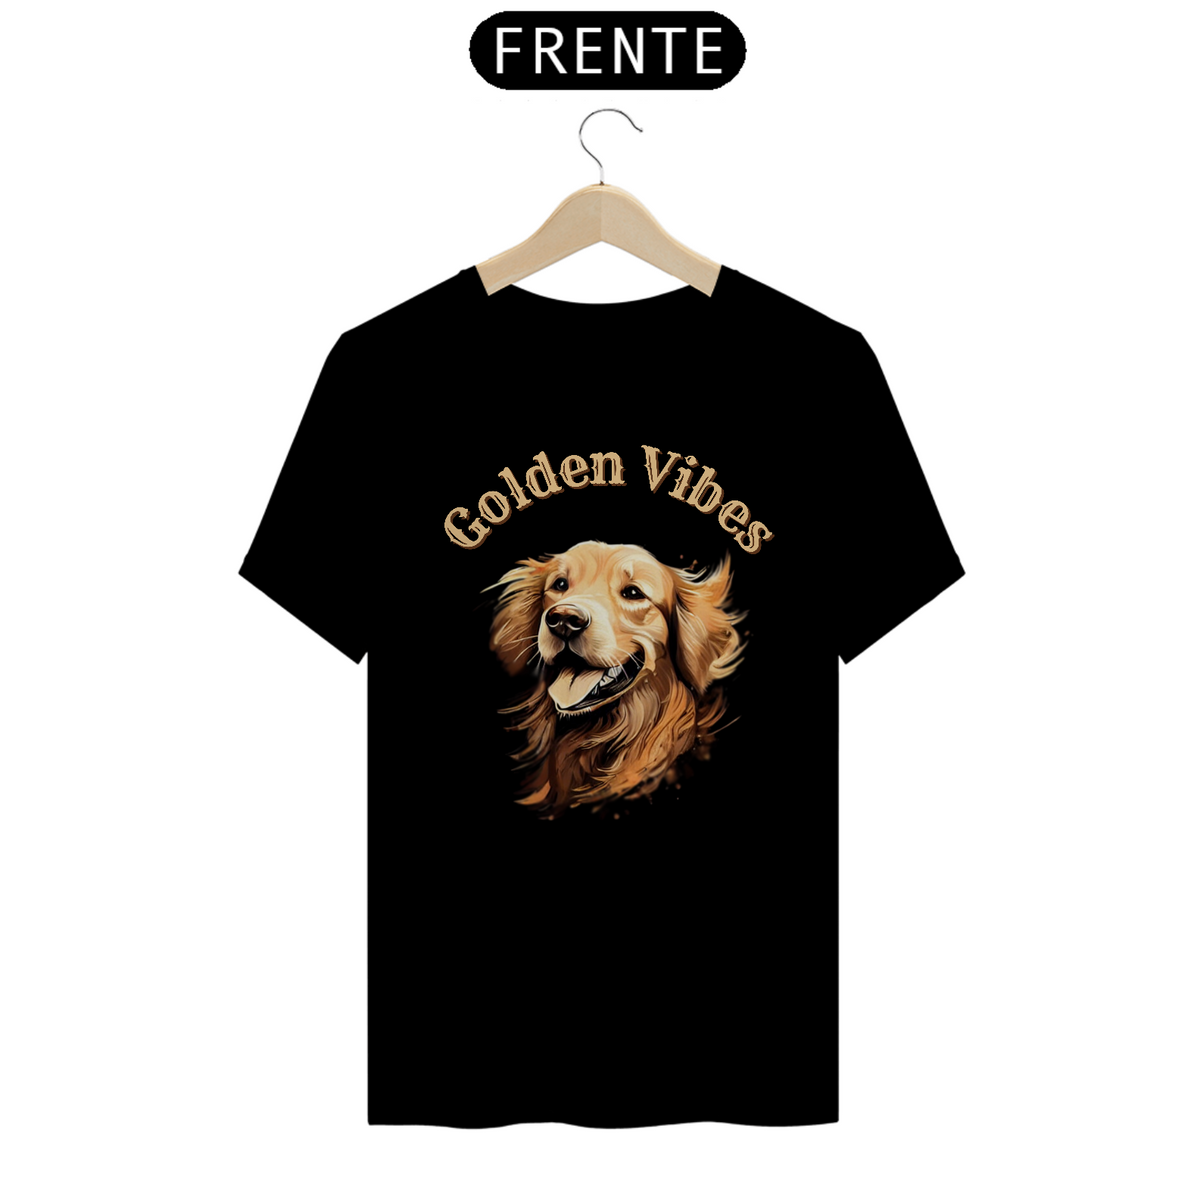 Nome do produto: Camiseta Golden Vibes